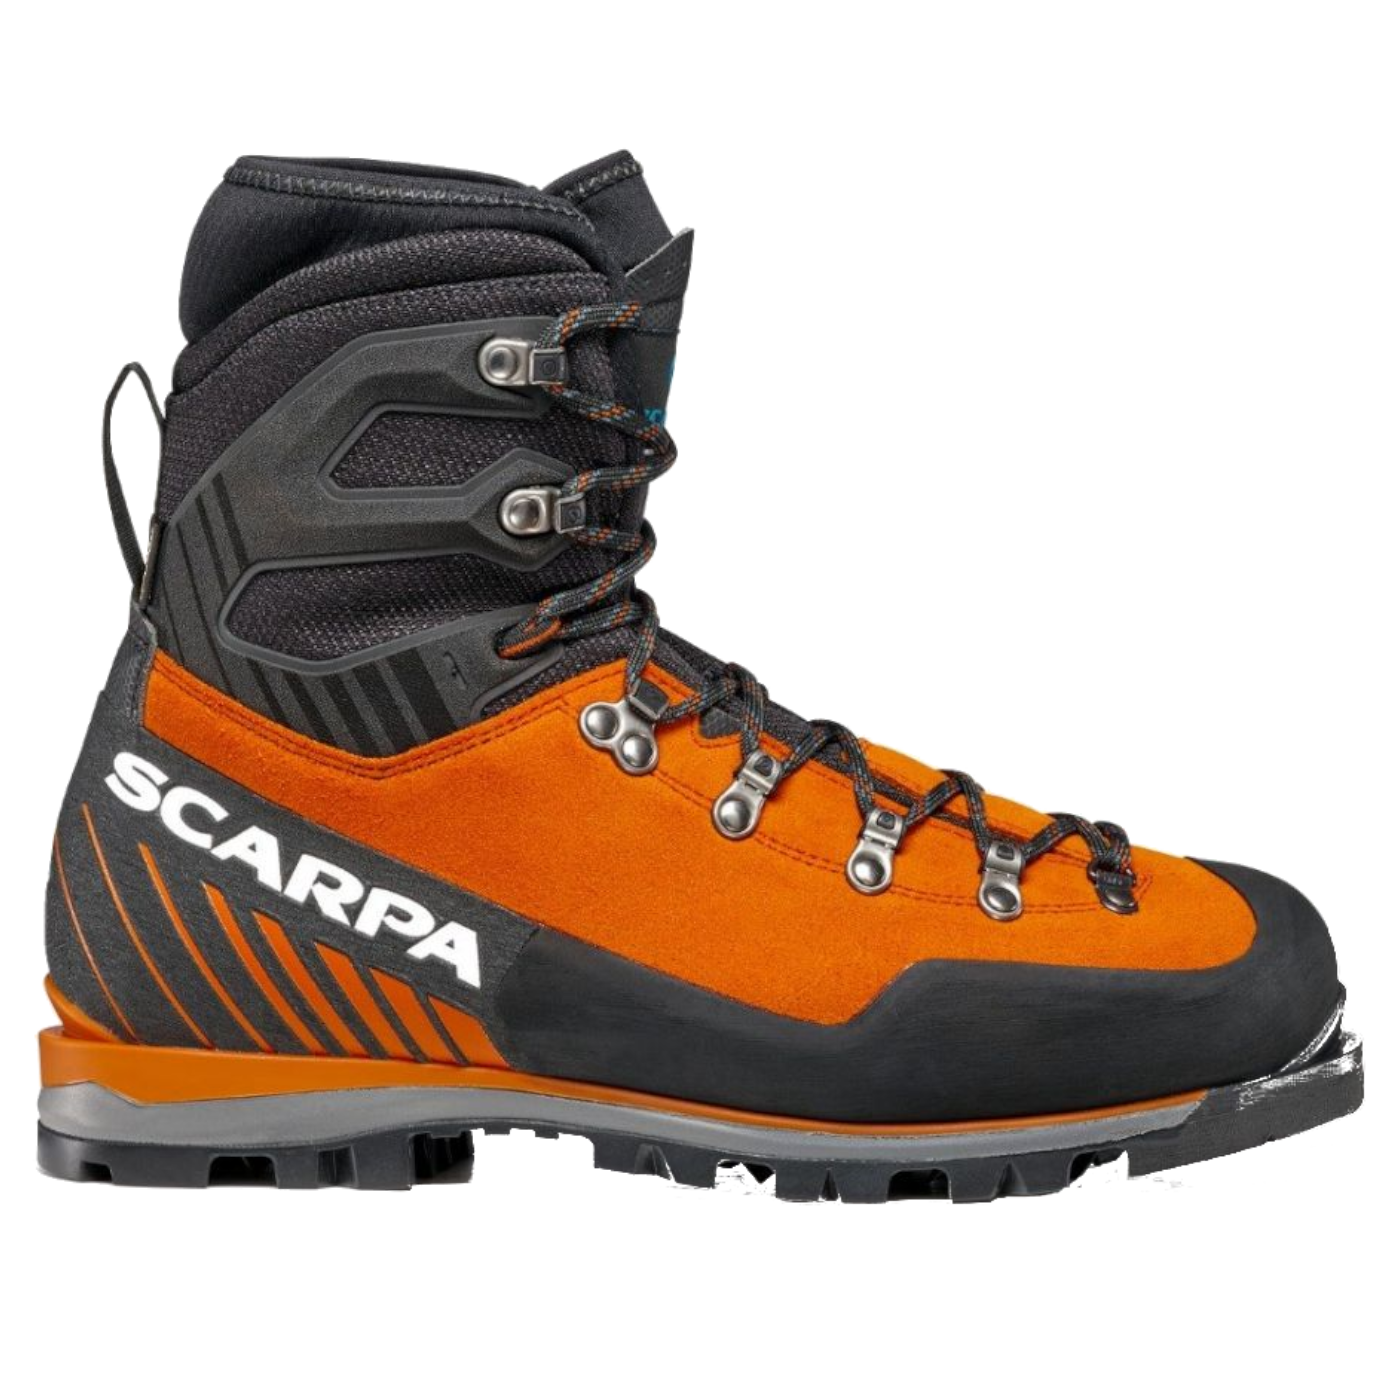 Scarpa Mont Blanc Pro GTX Size 44 Mountaineering Boot